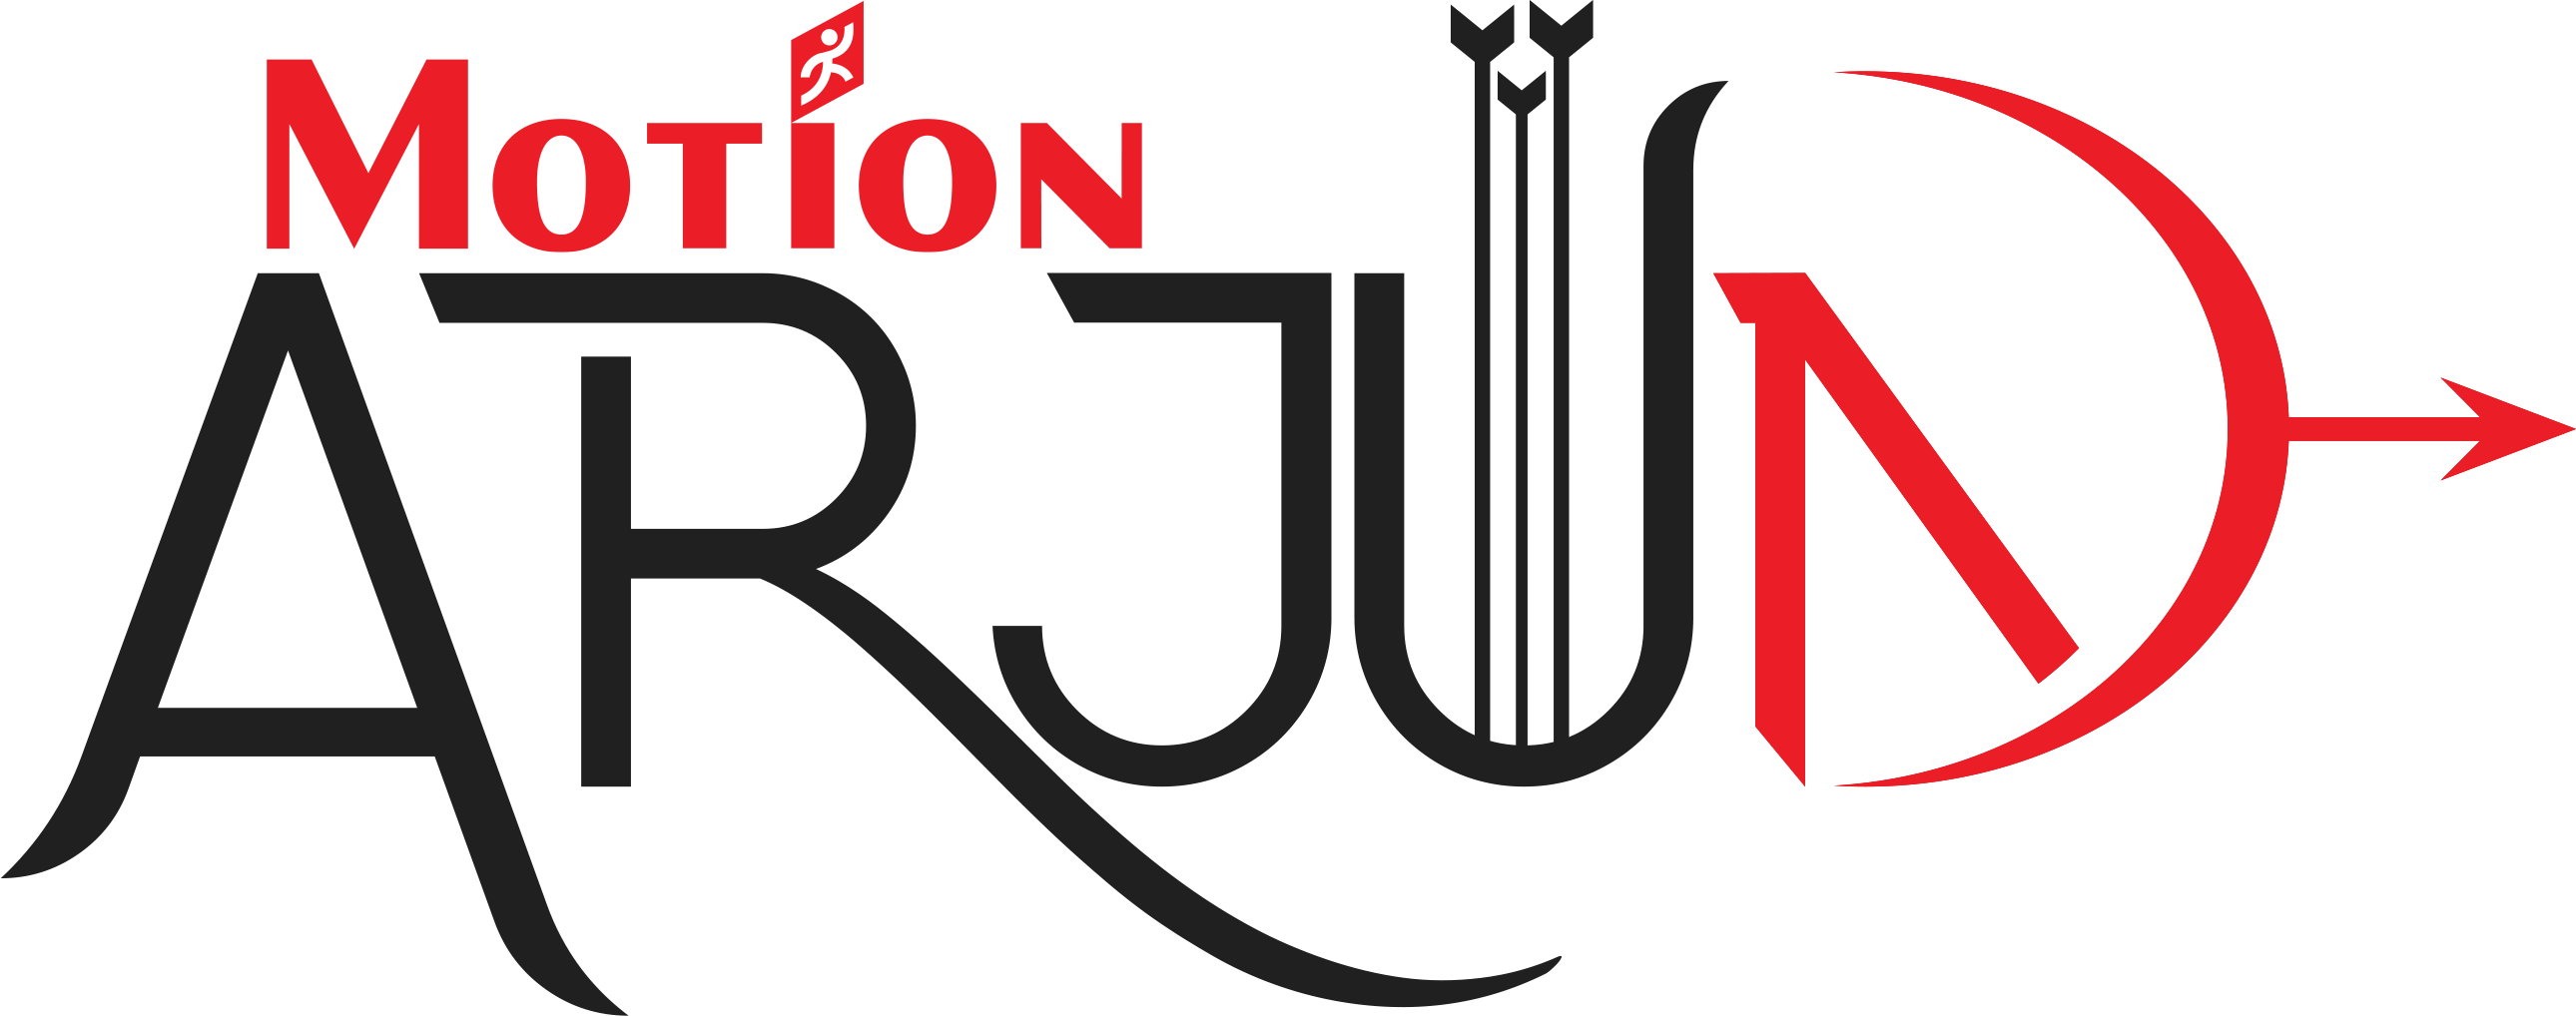 Motion Arjun logo